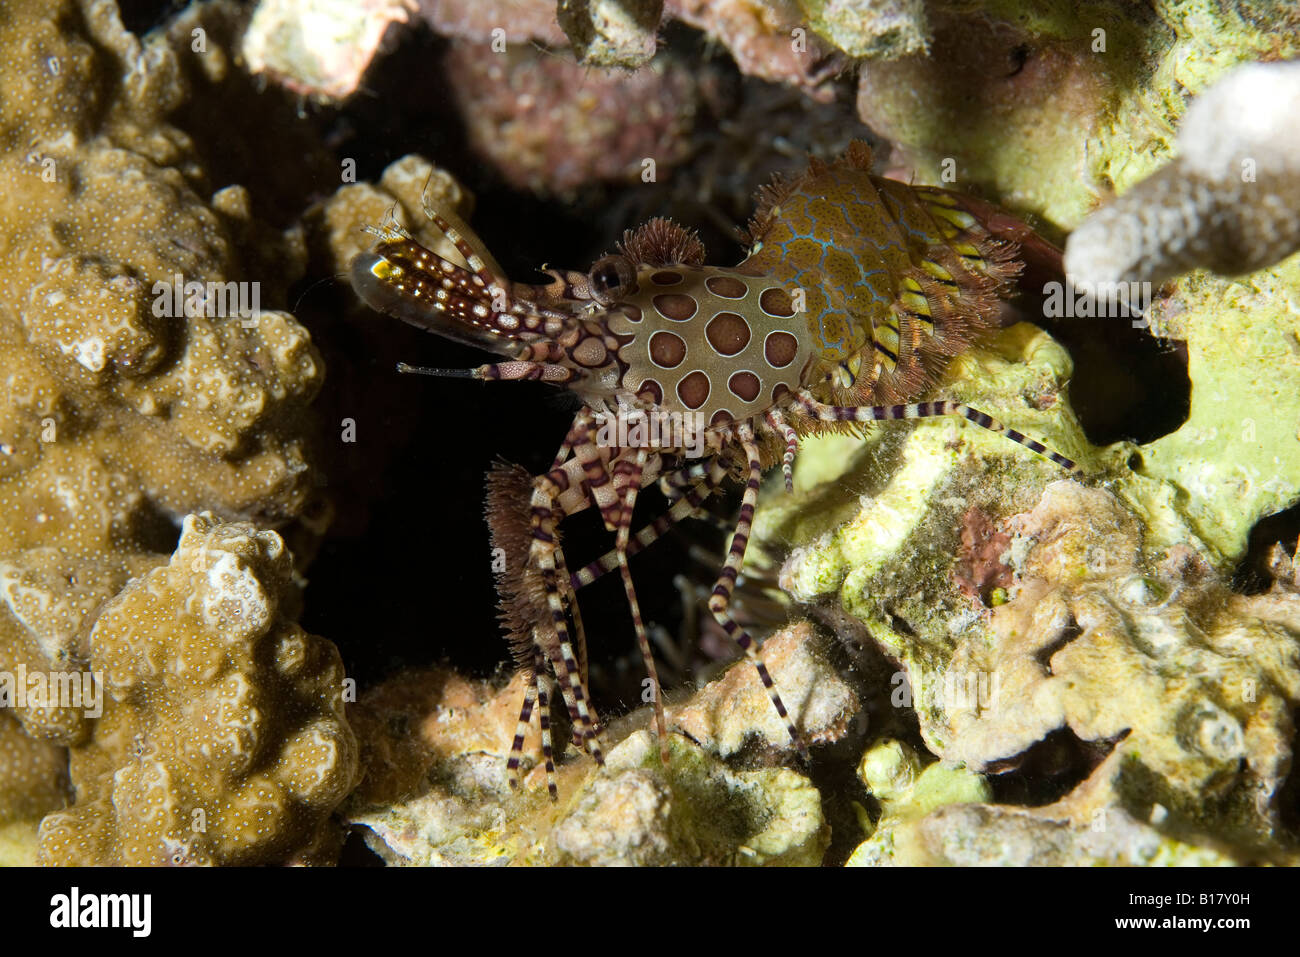 marble shrimp Saron spec Island Malapascua Cebu Philippines Stock Photo